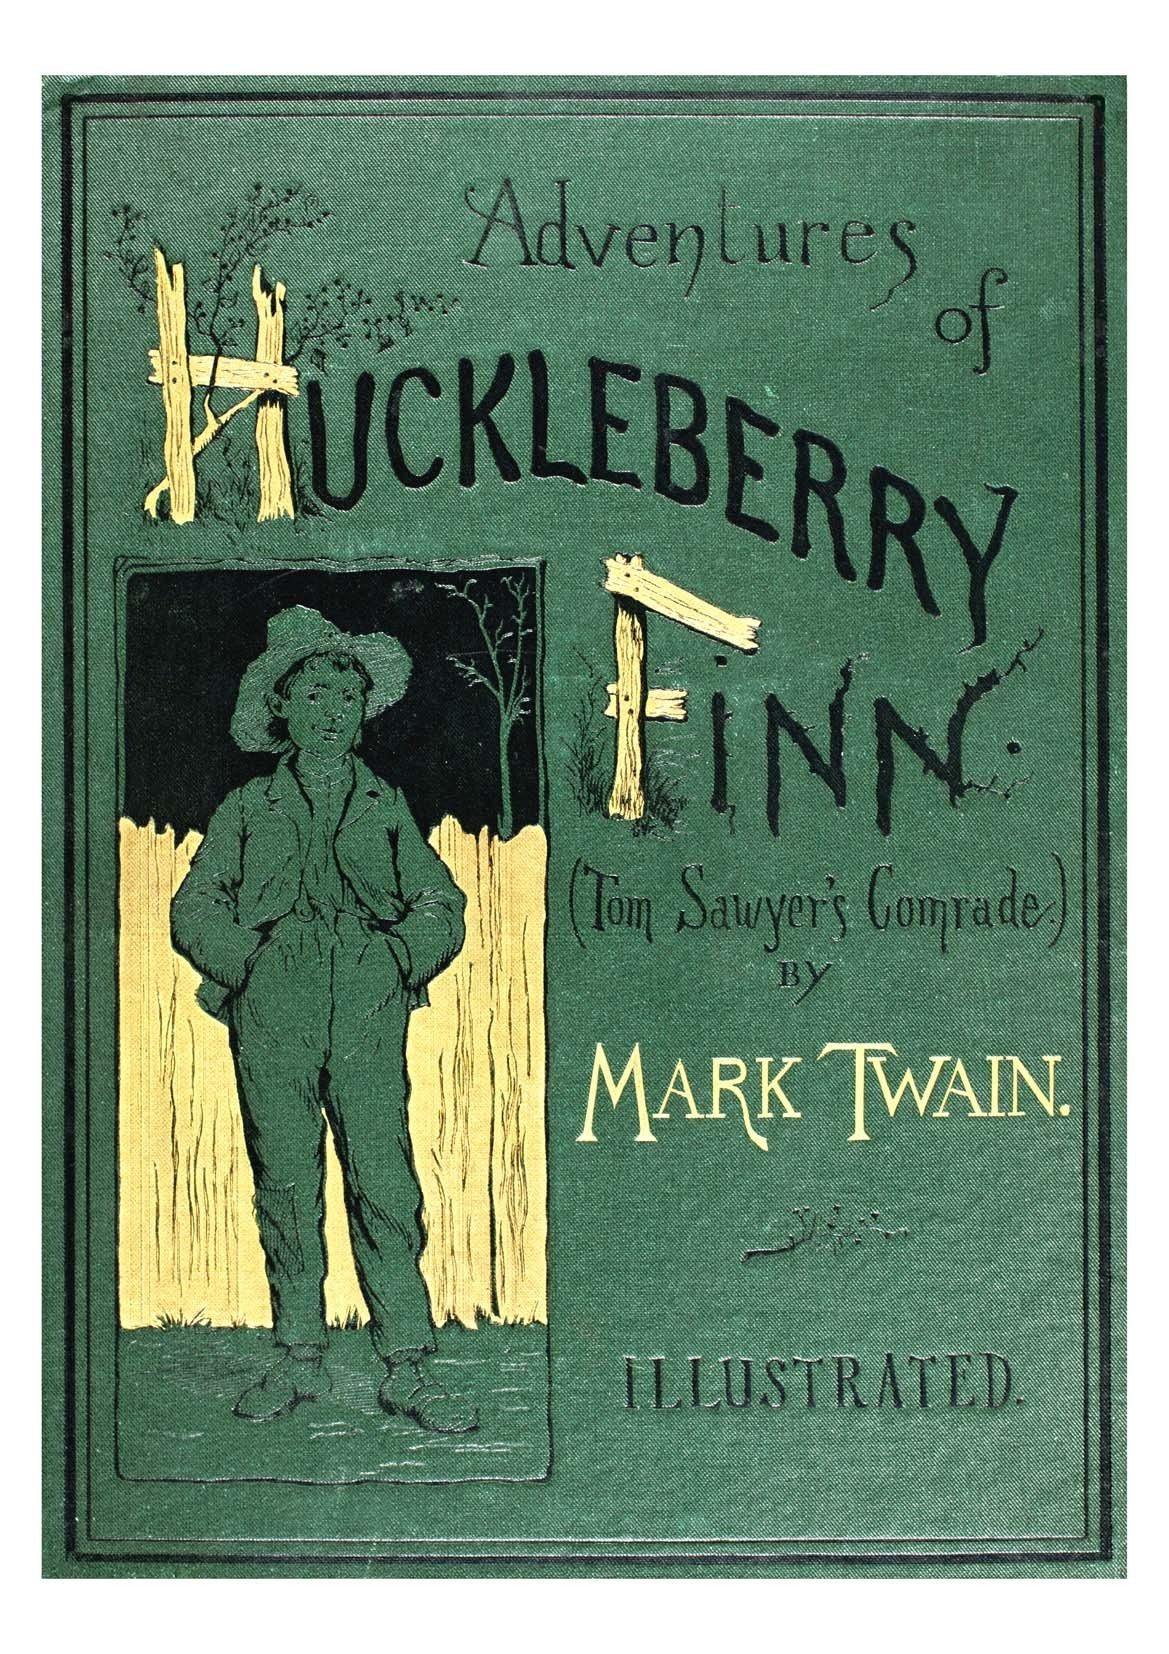 HUCKLEBERRY FINN PRINT: Vintage Twain Book Cover Art Poster - Pimlico Prints